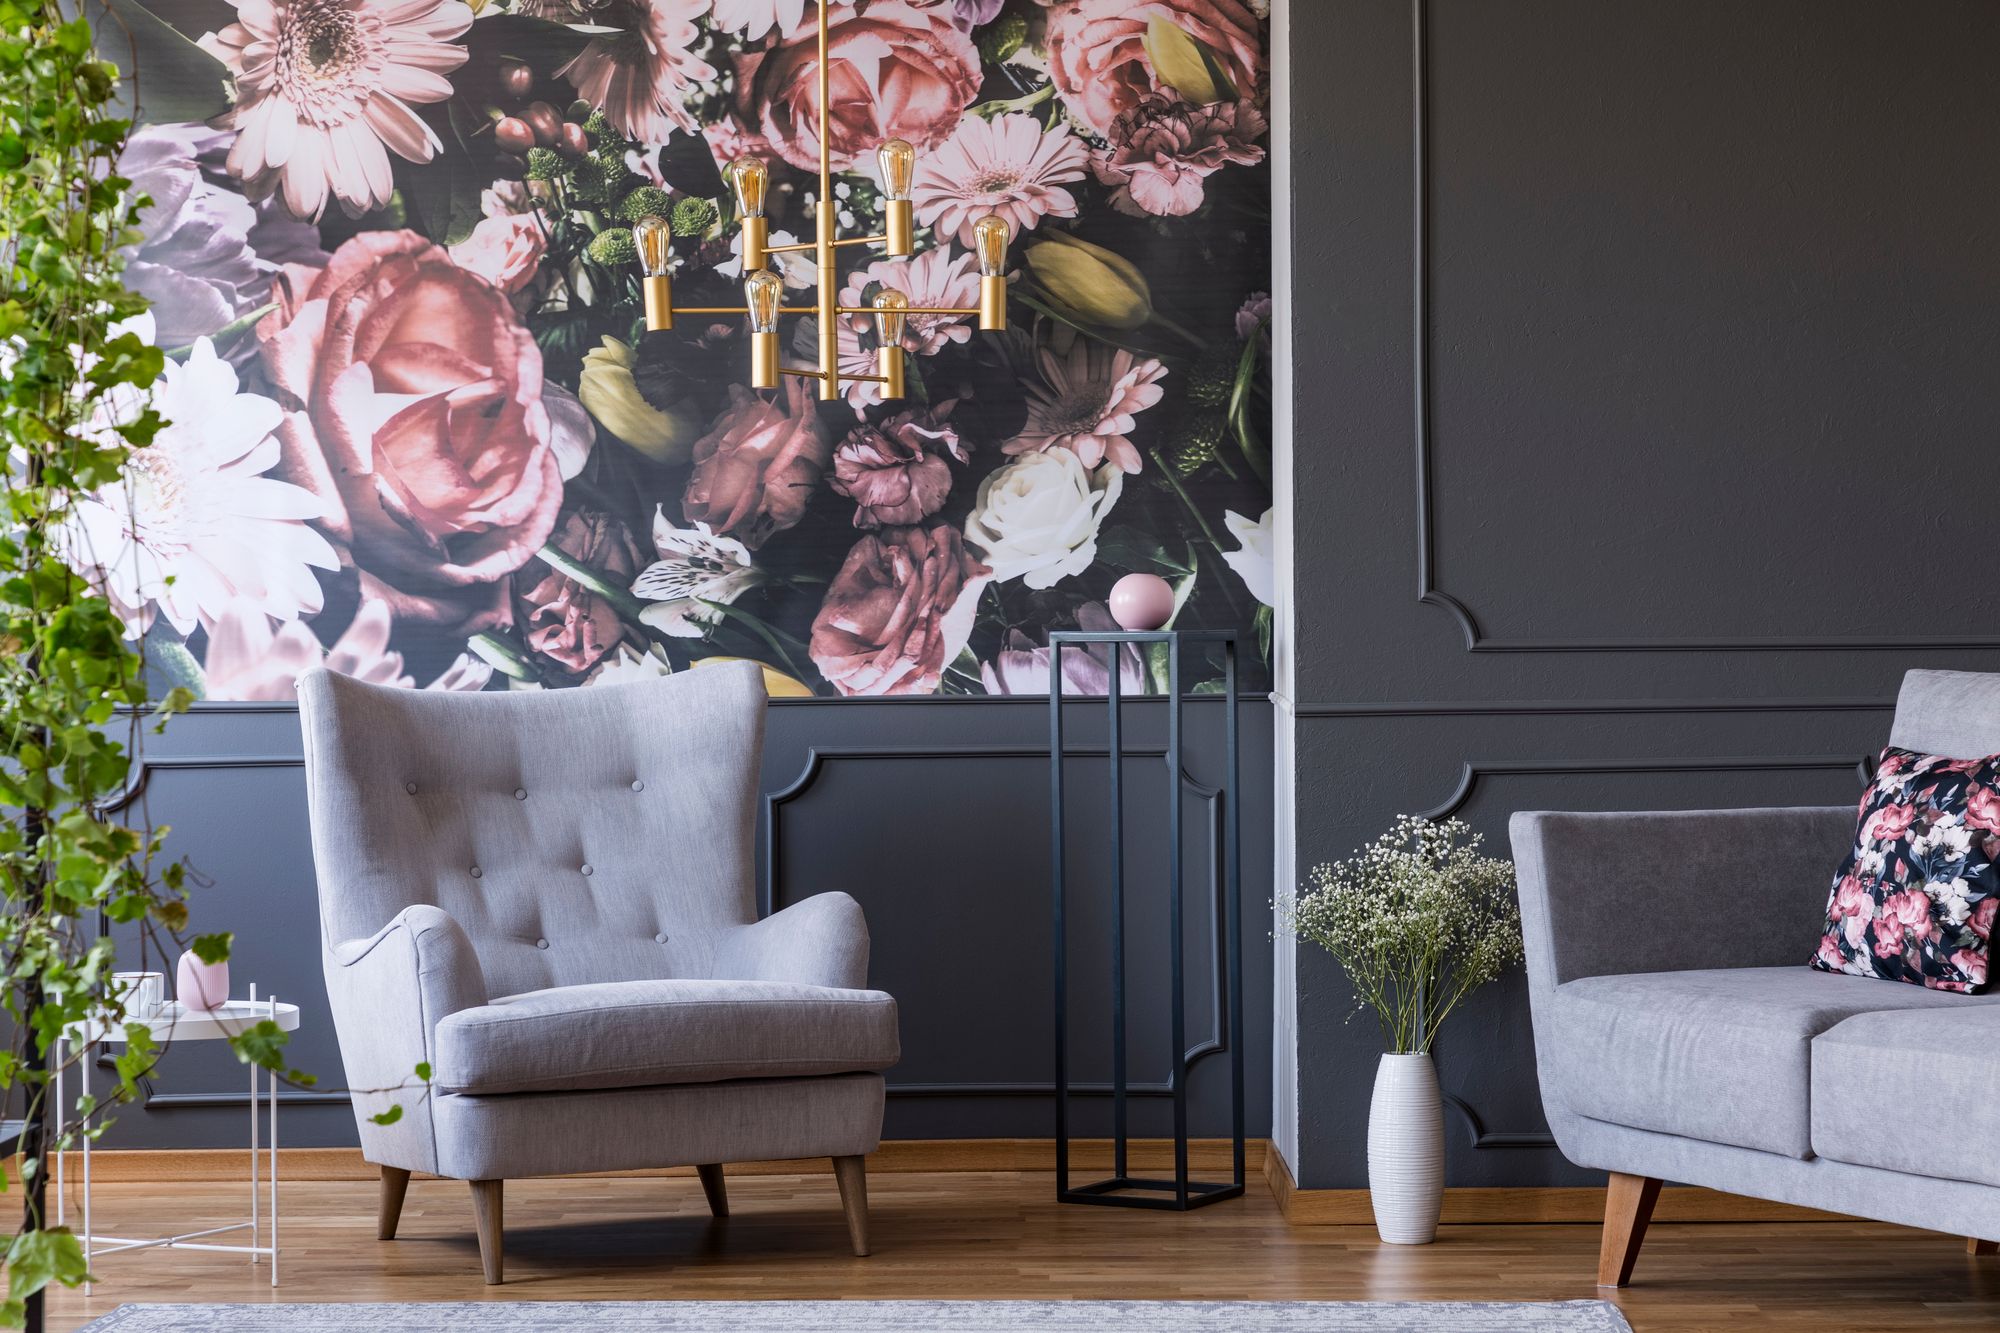 Grey Armchair Against Flowers Wallpaper In Dark Living Room Interior